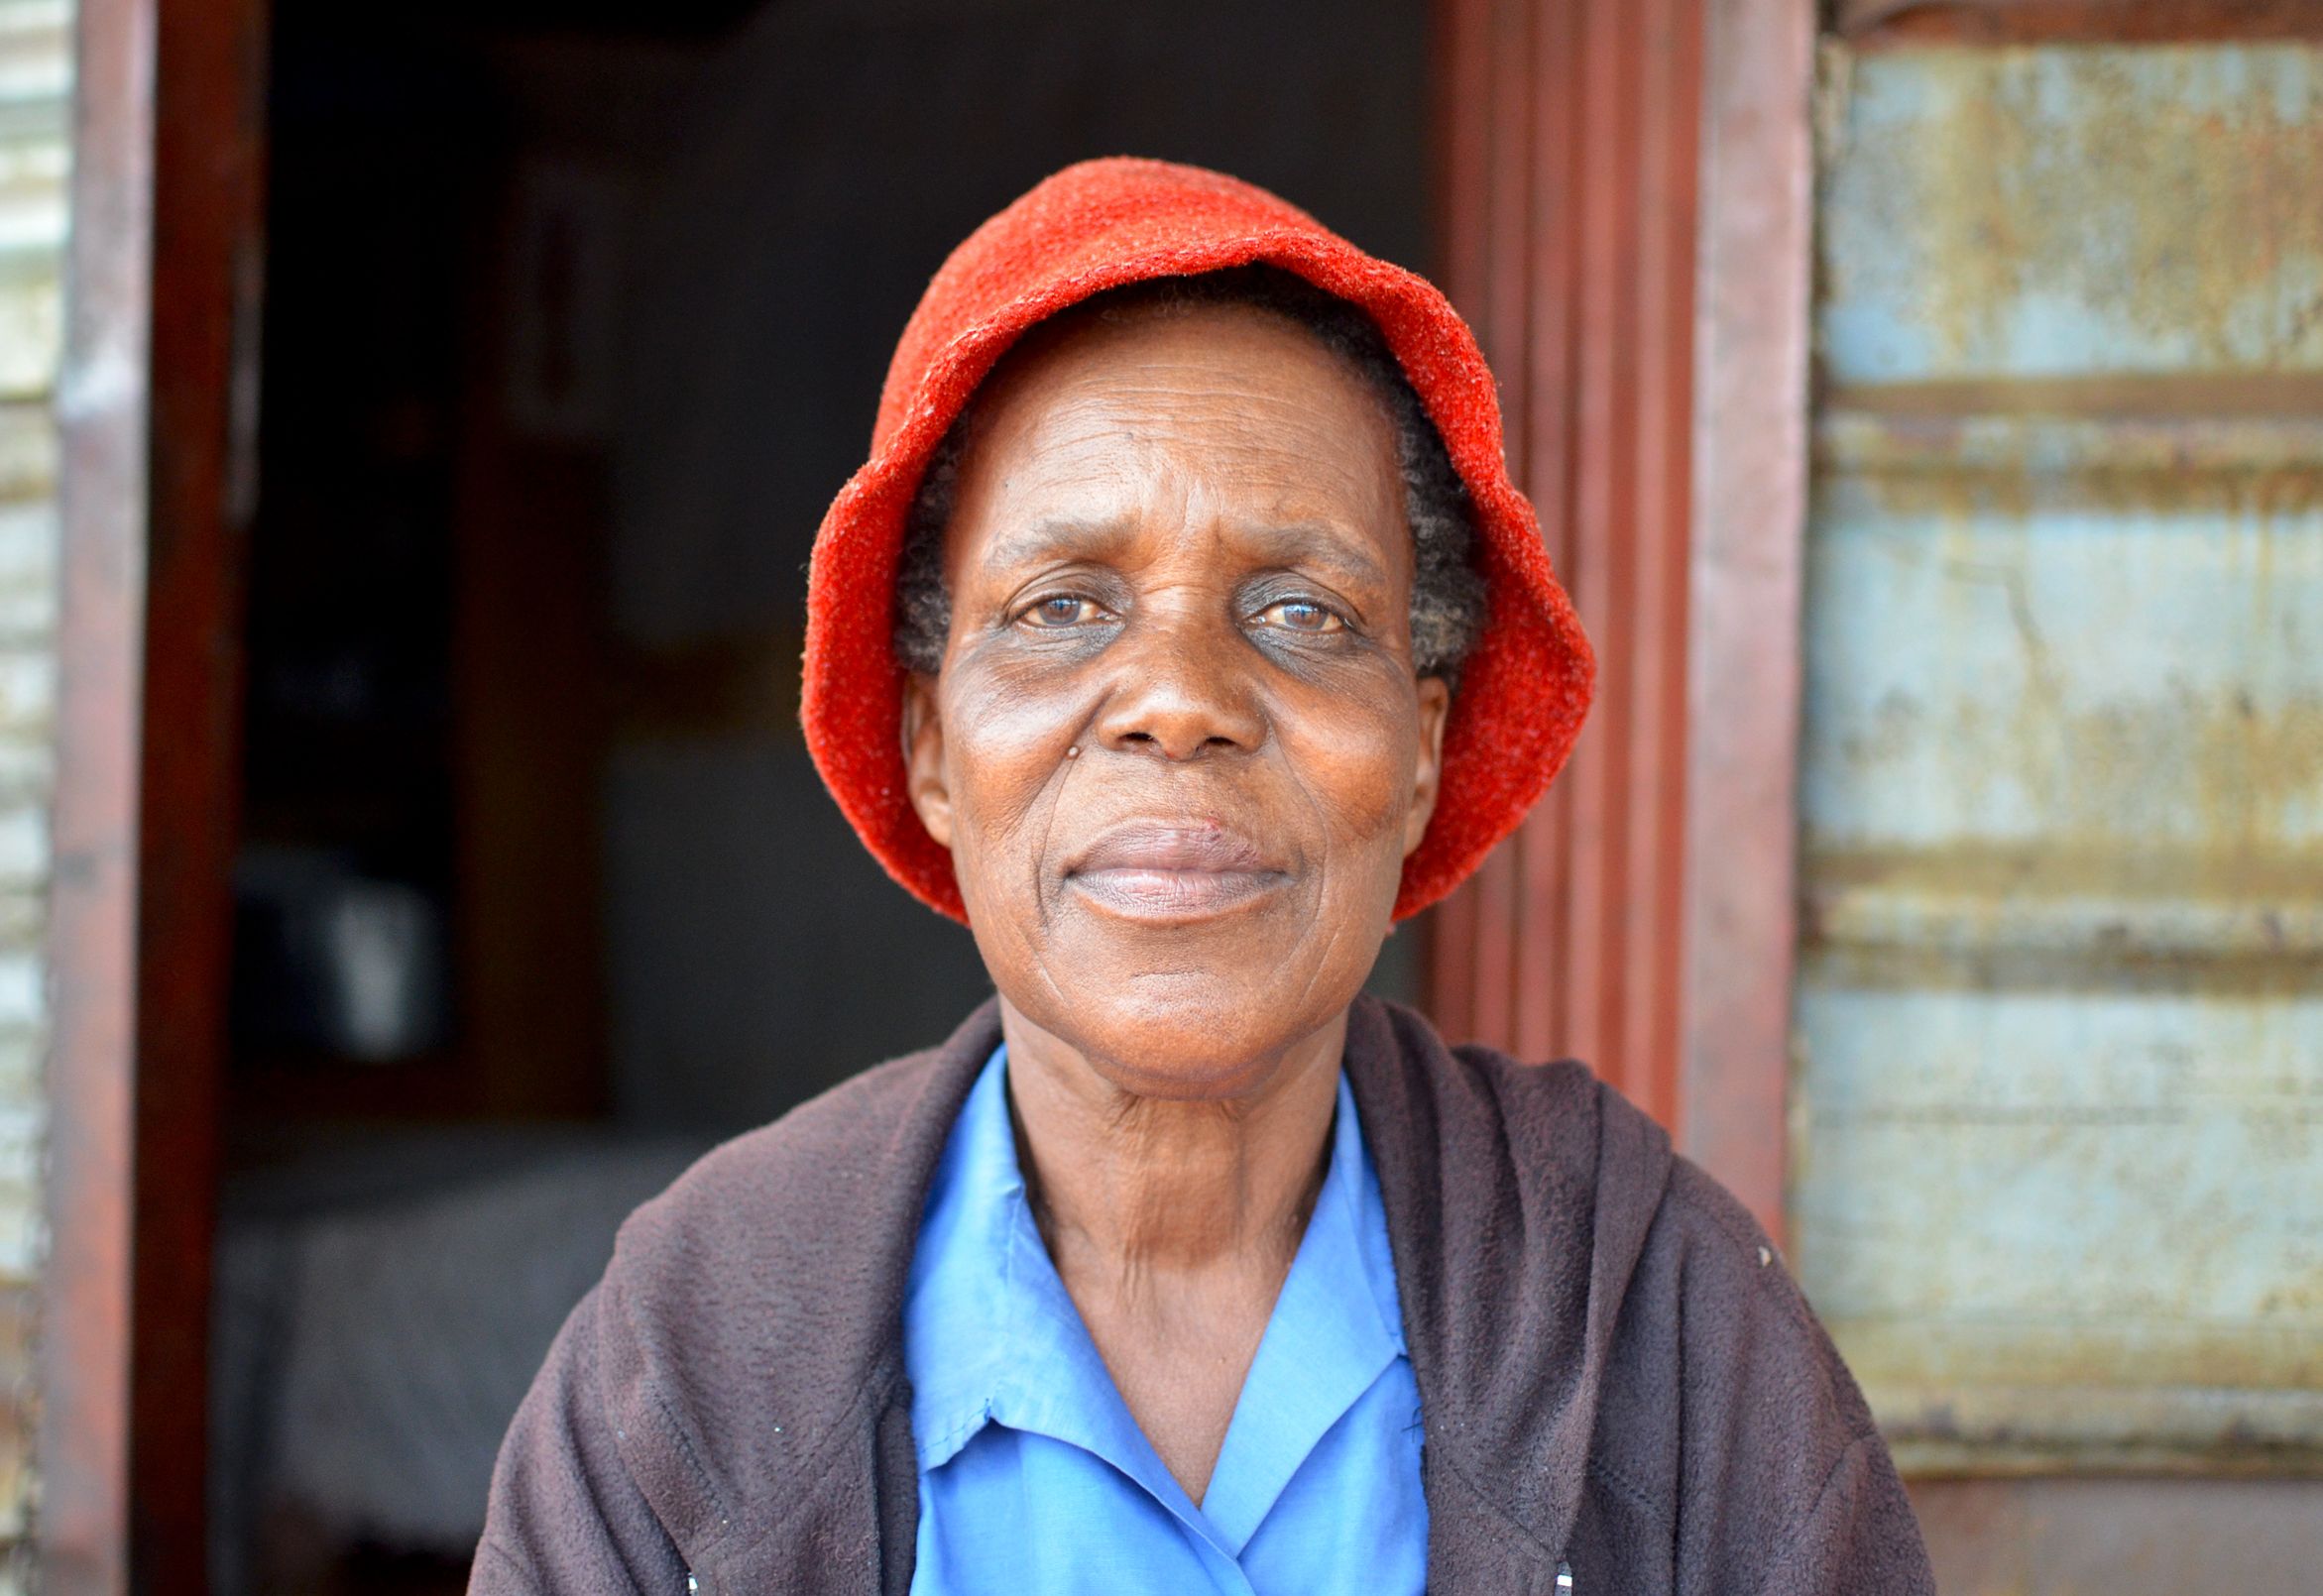 Rebecca Lebeta, a resident of the Masakhane informal settlement, waits for promised relocation. Image by Mark Olalde. South Africa, 2017.